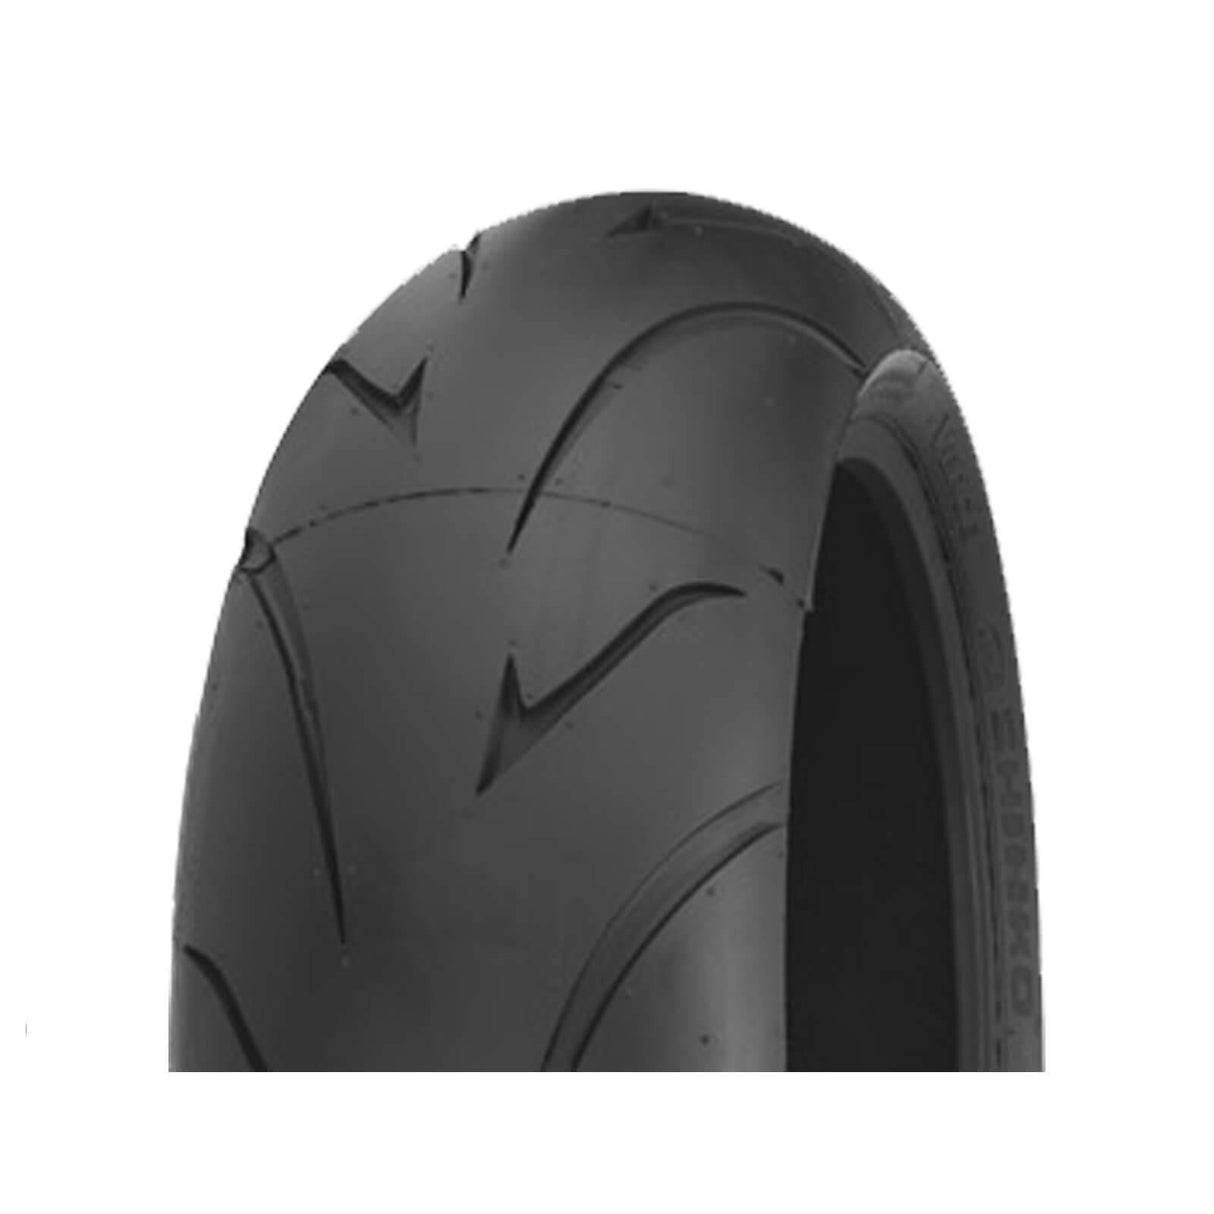 300/35VR18 R011 Verge Shinko Rear Tyre